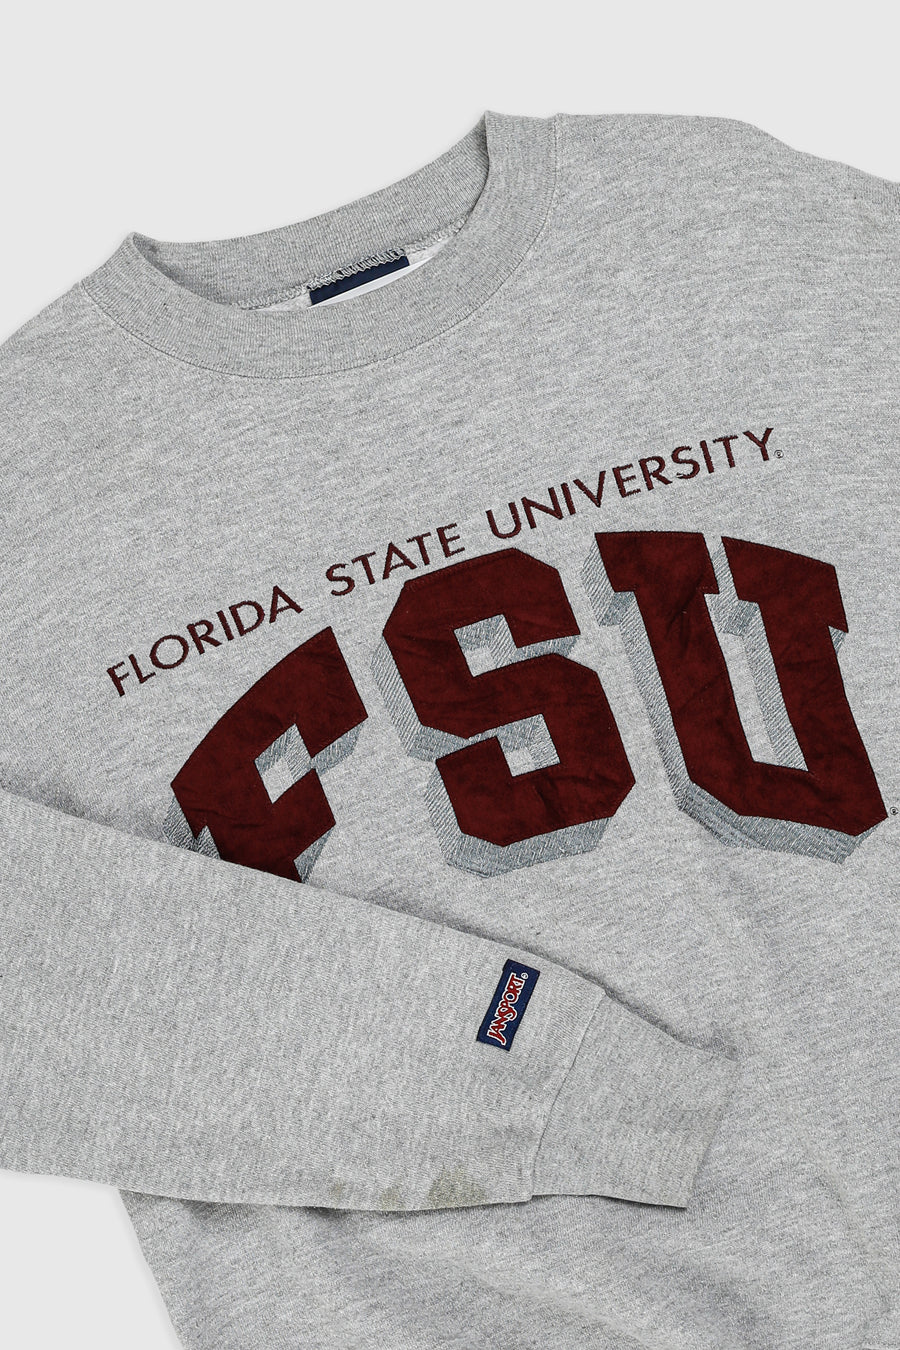 Vintage Florida University Sweatshirt - S